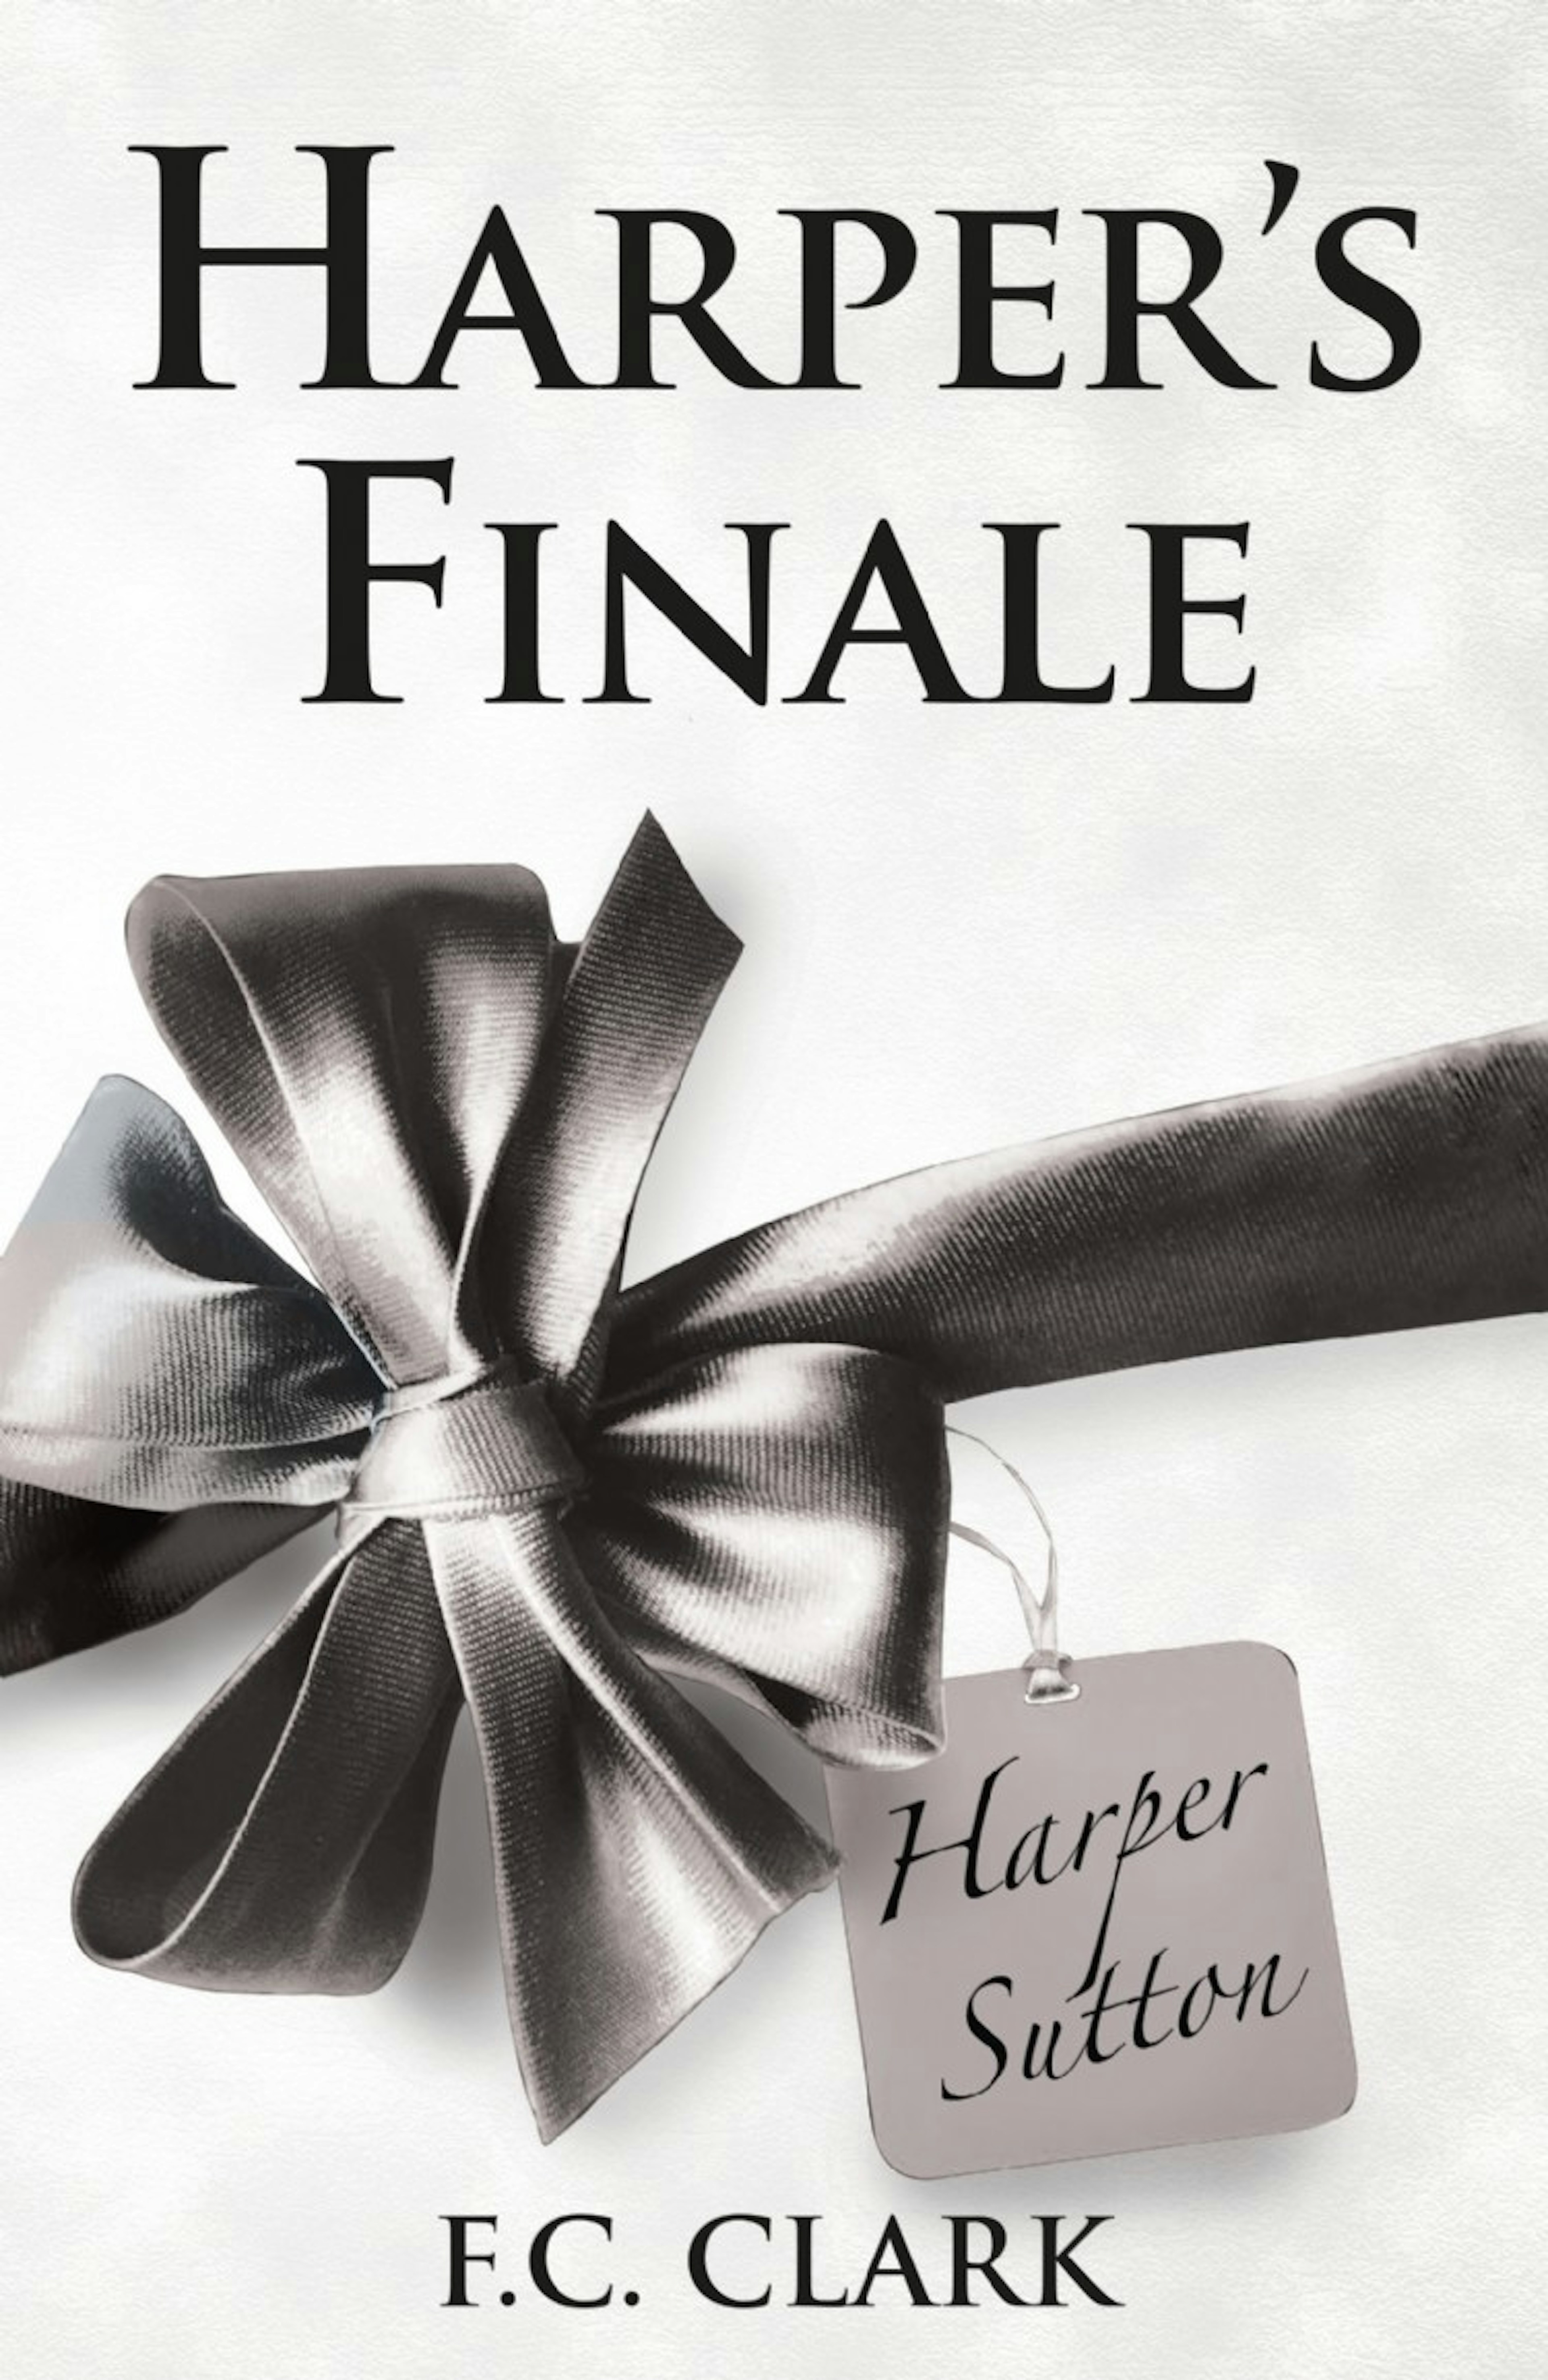 Harper’s Finale